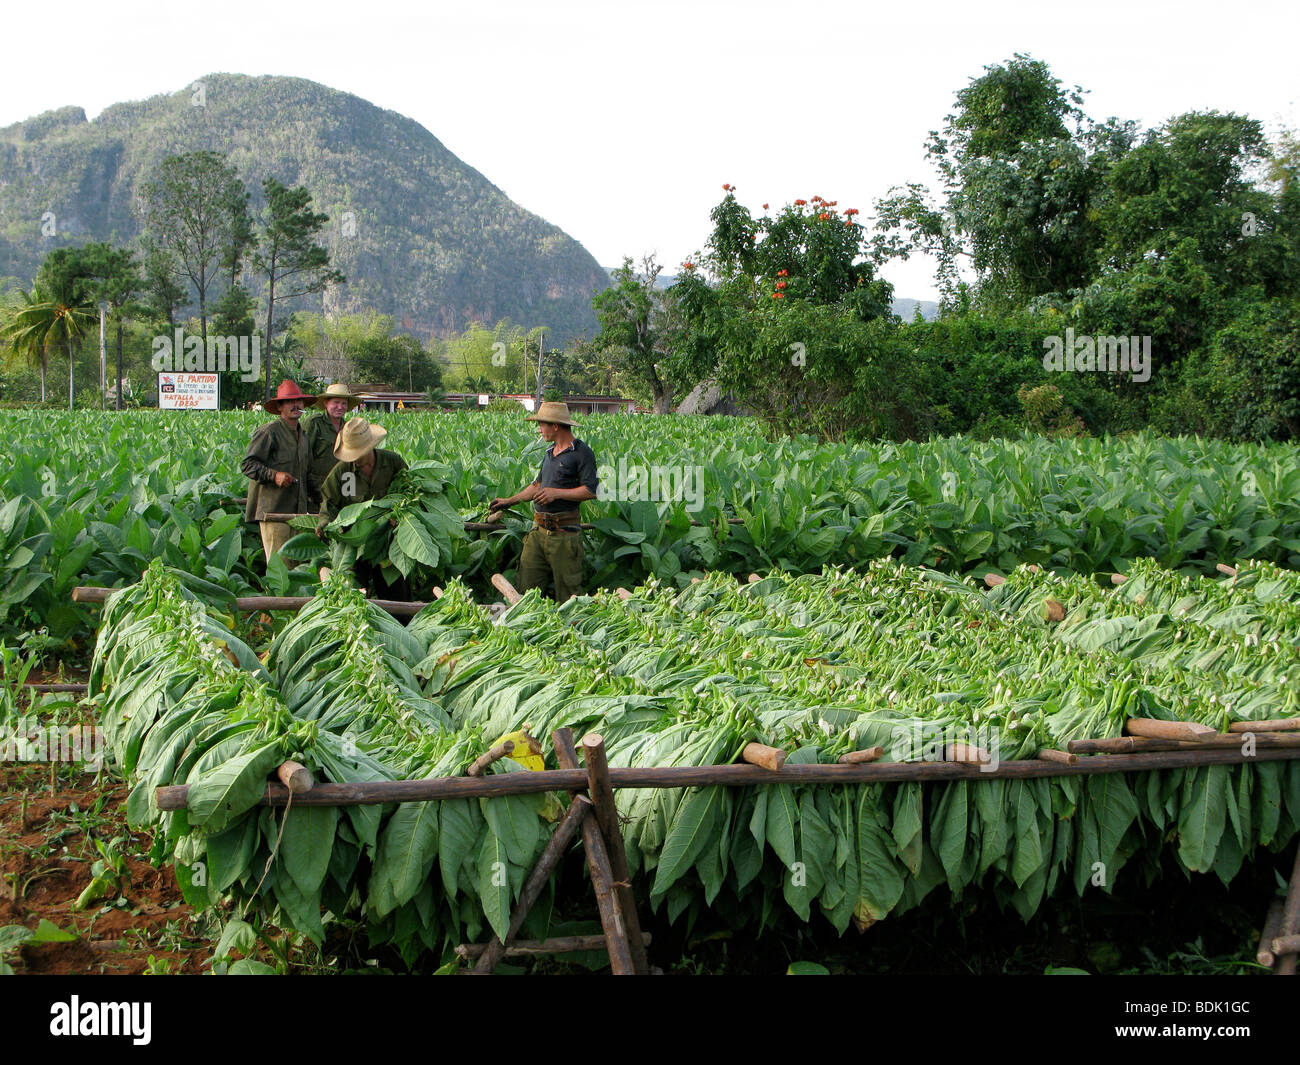 Harvesting tobacco leaves for cigar production at Pinar del Rio. Cuba. Stock Photo